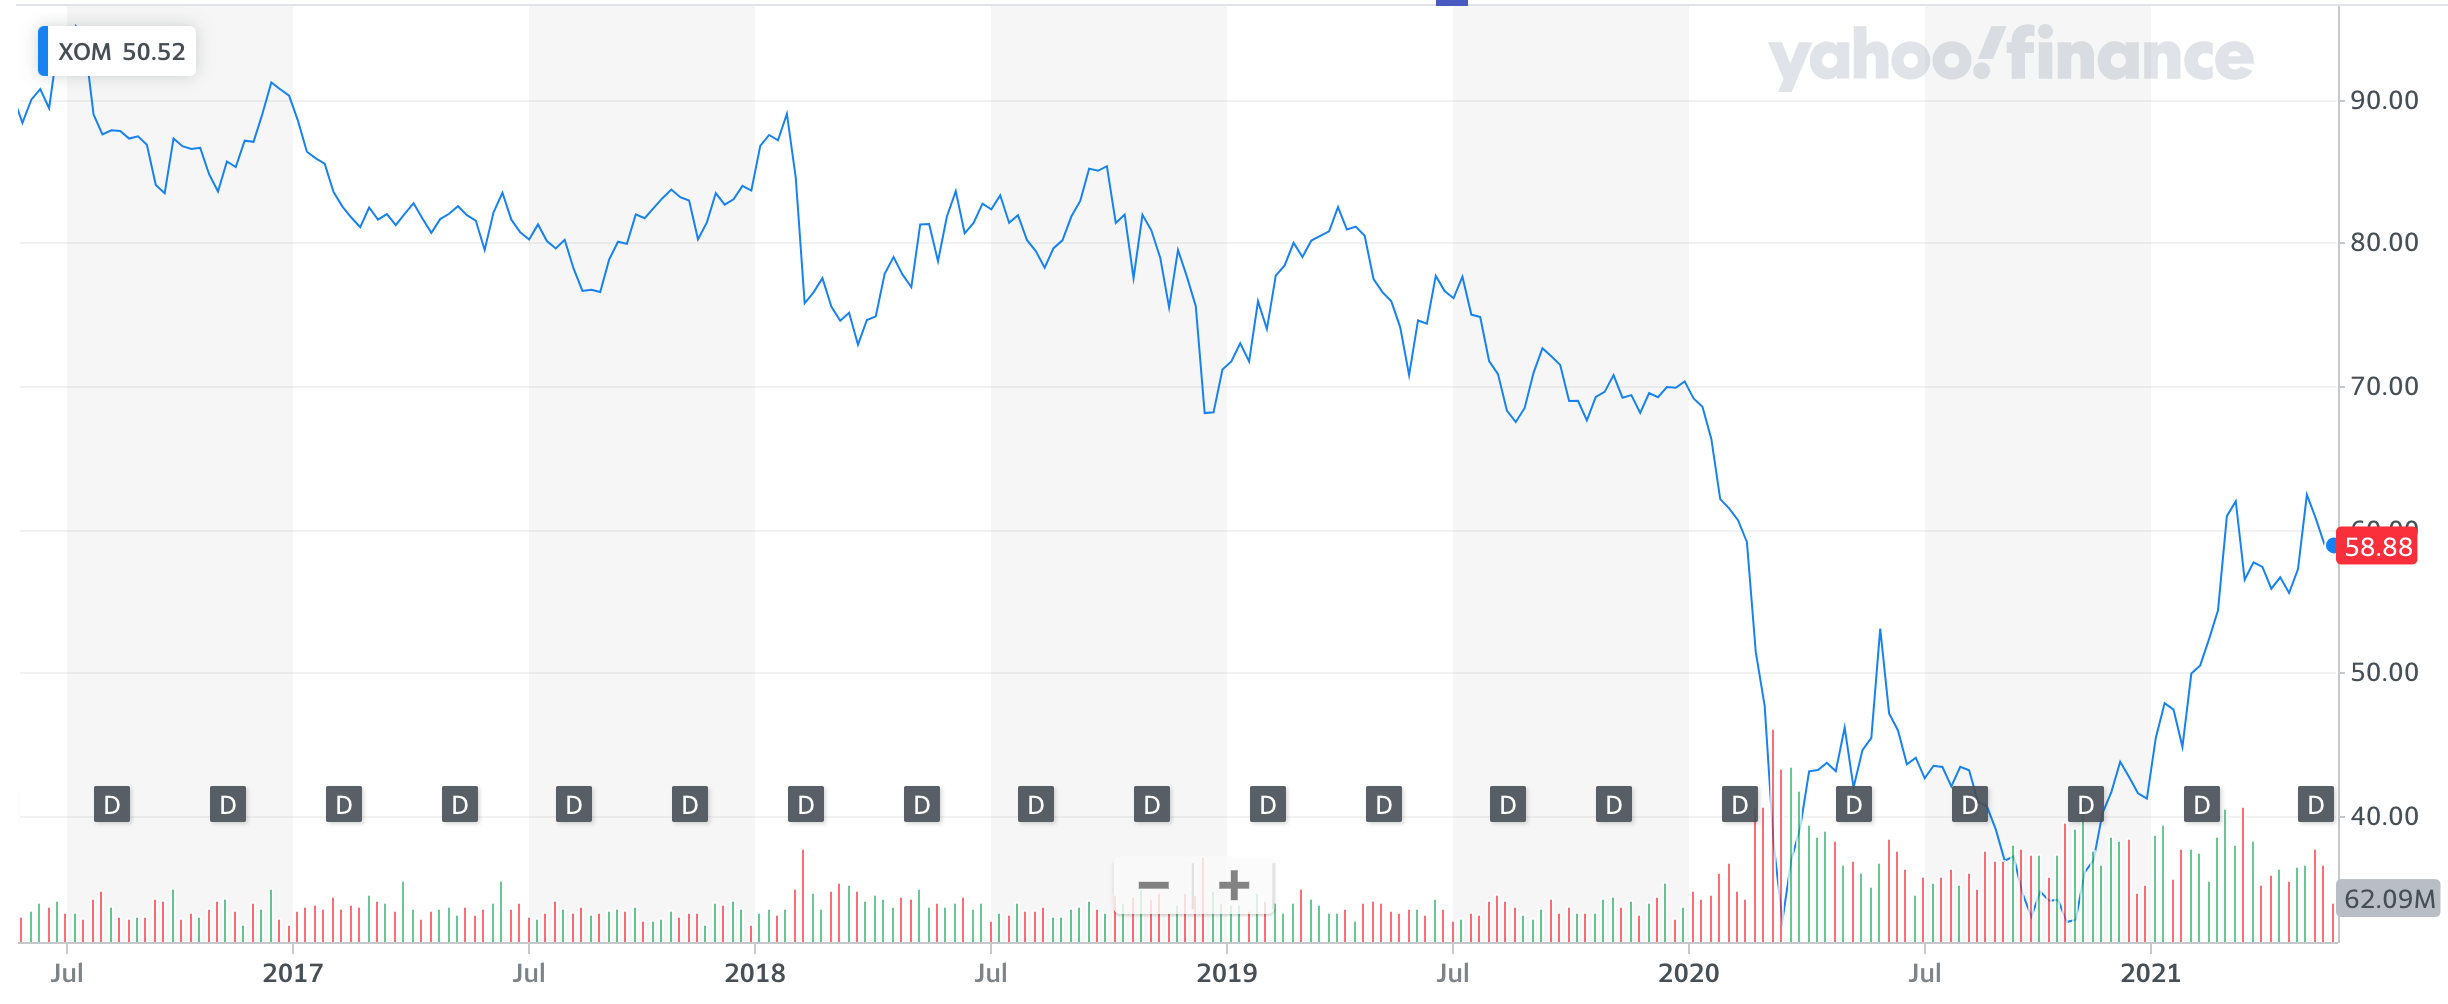 Exxon Mobil Corporation (XOM) Stock Forecast & Price Predictions for